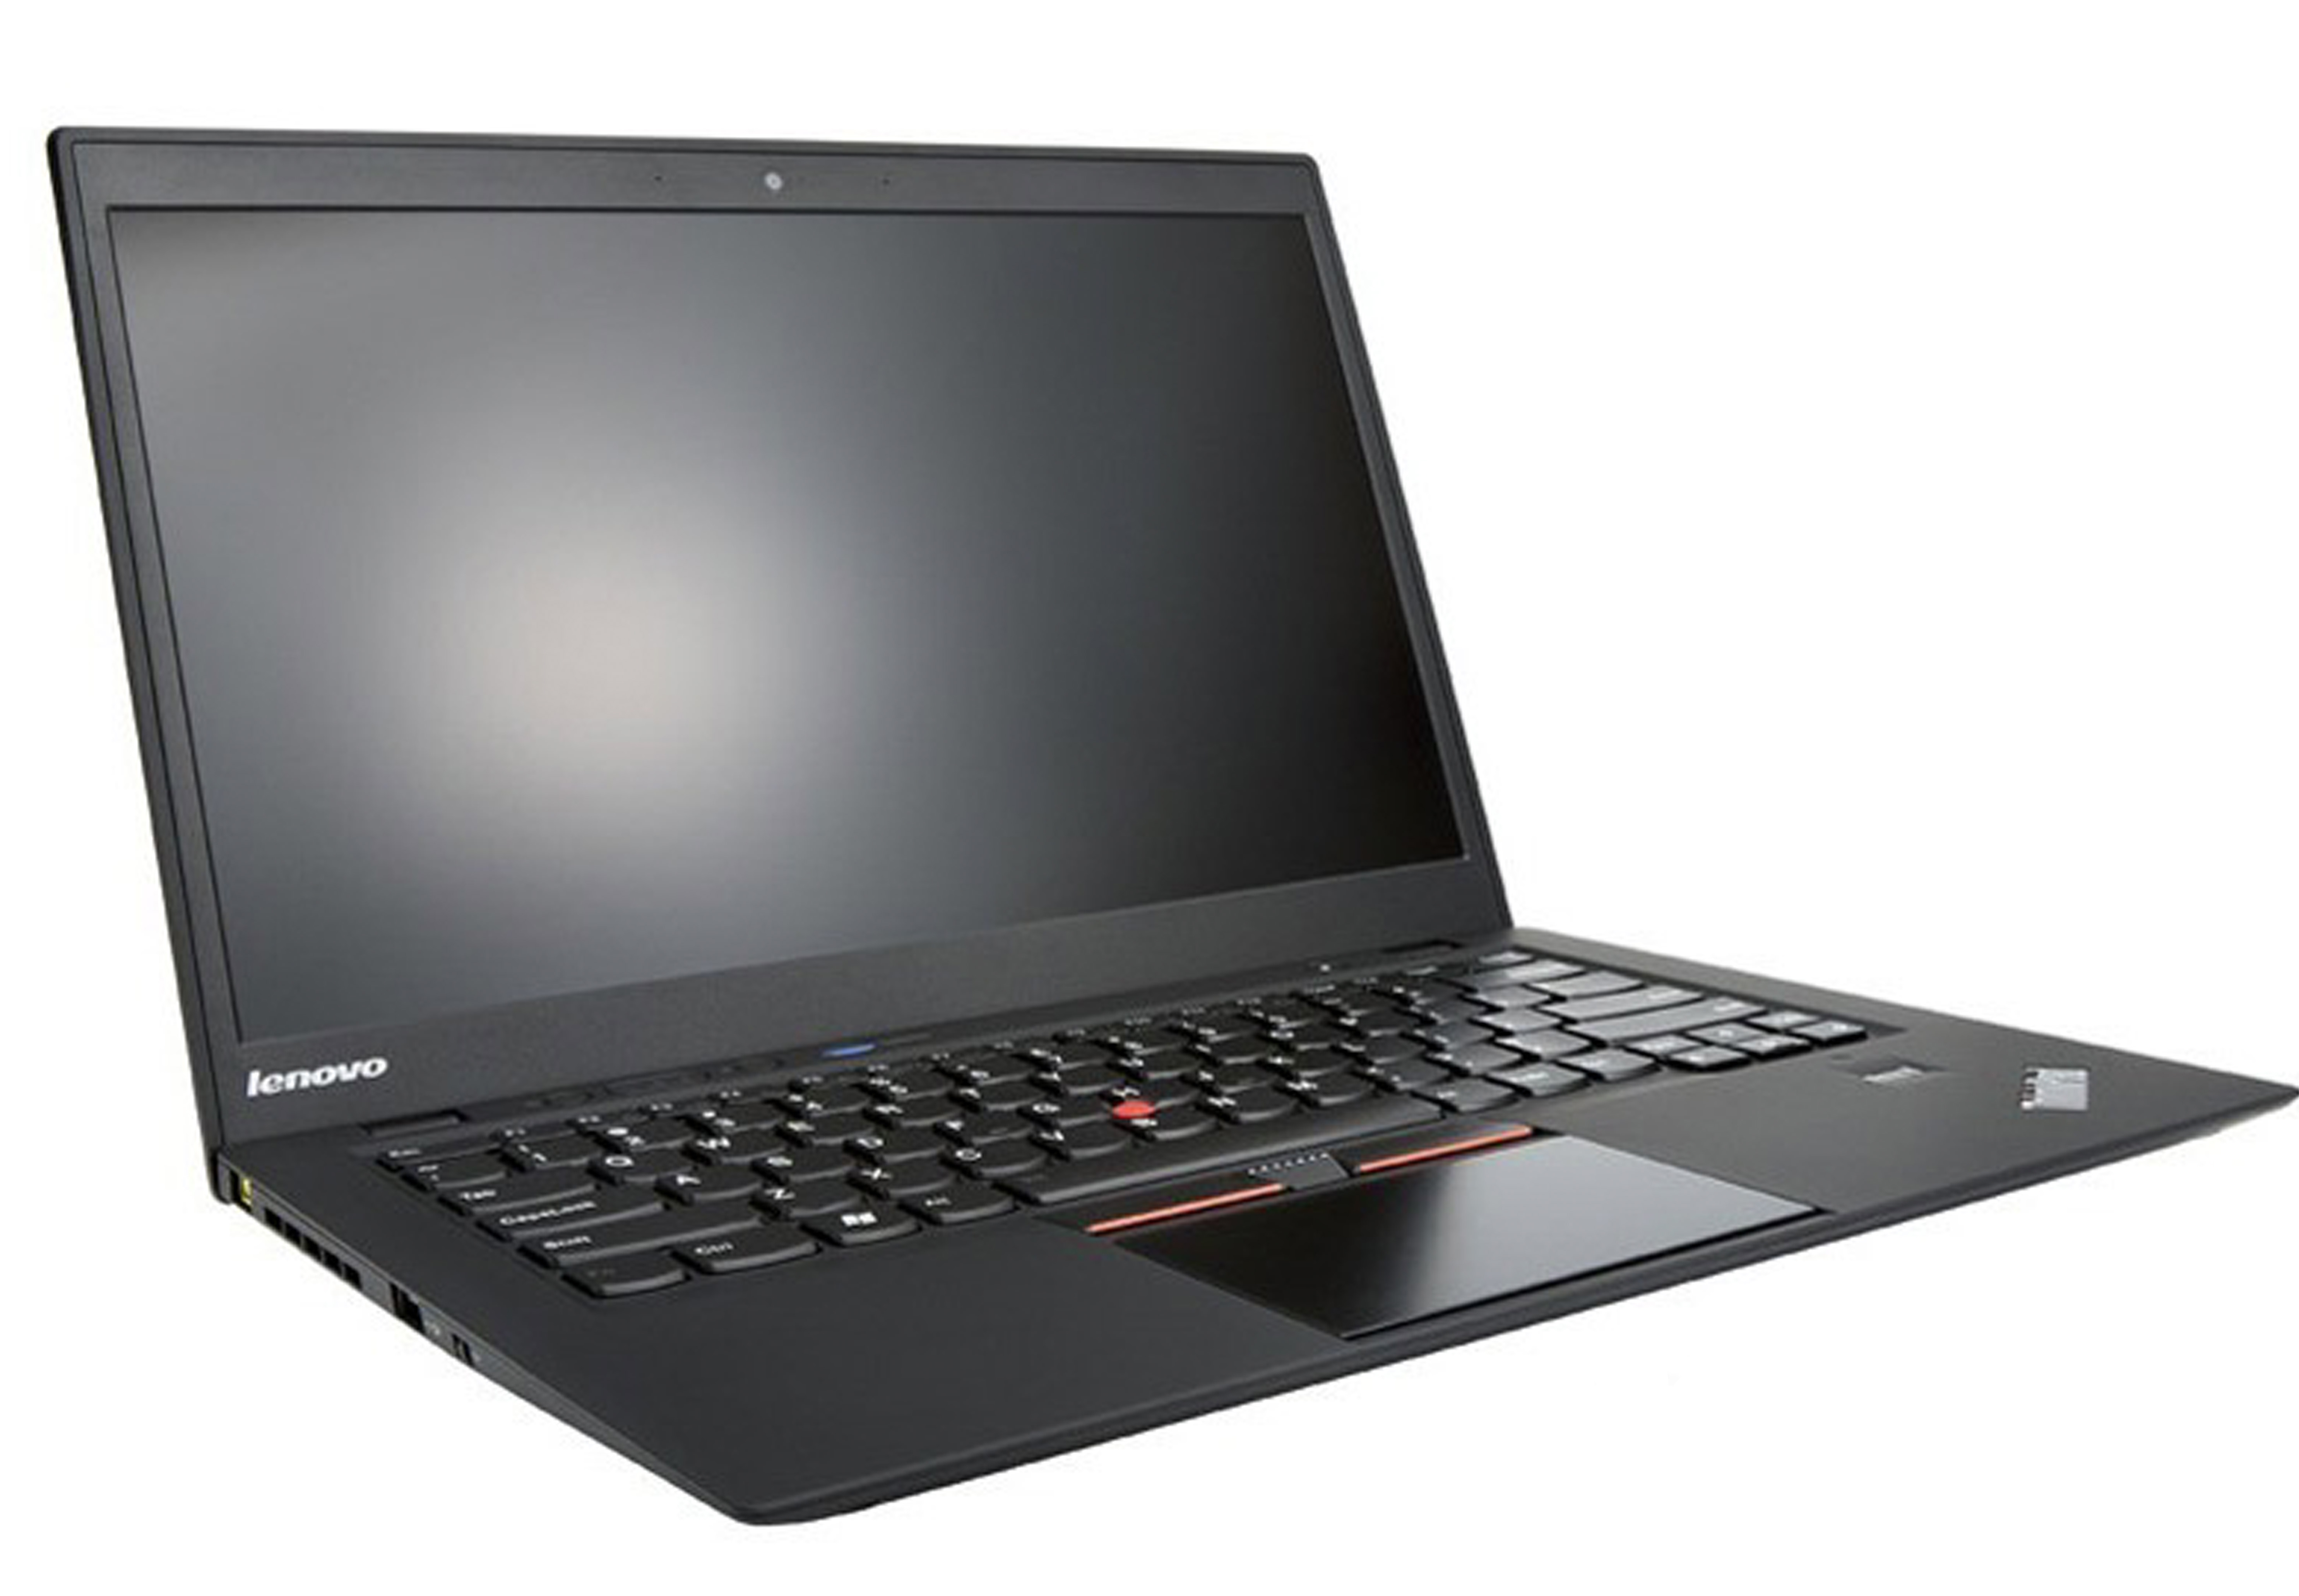 聯想ThinkPad X1 Carbon